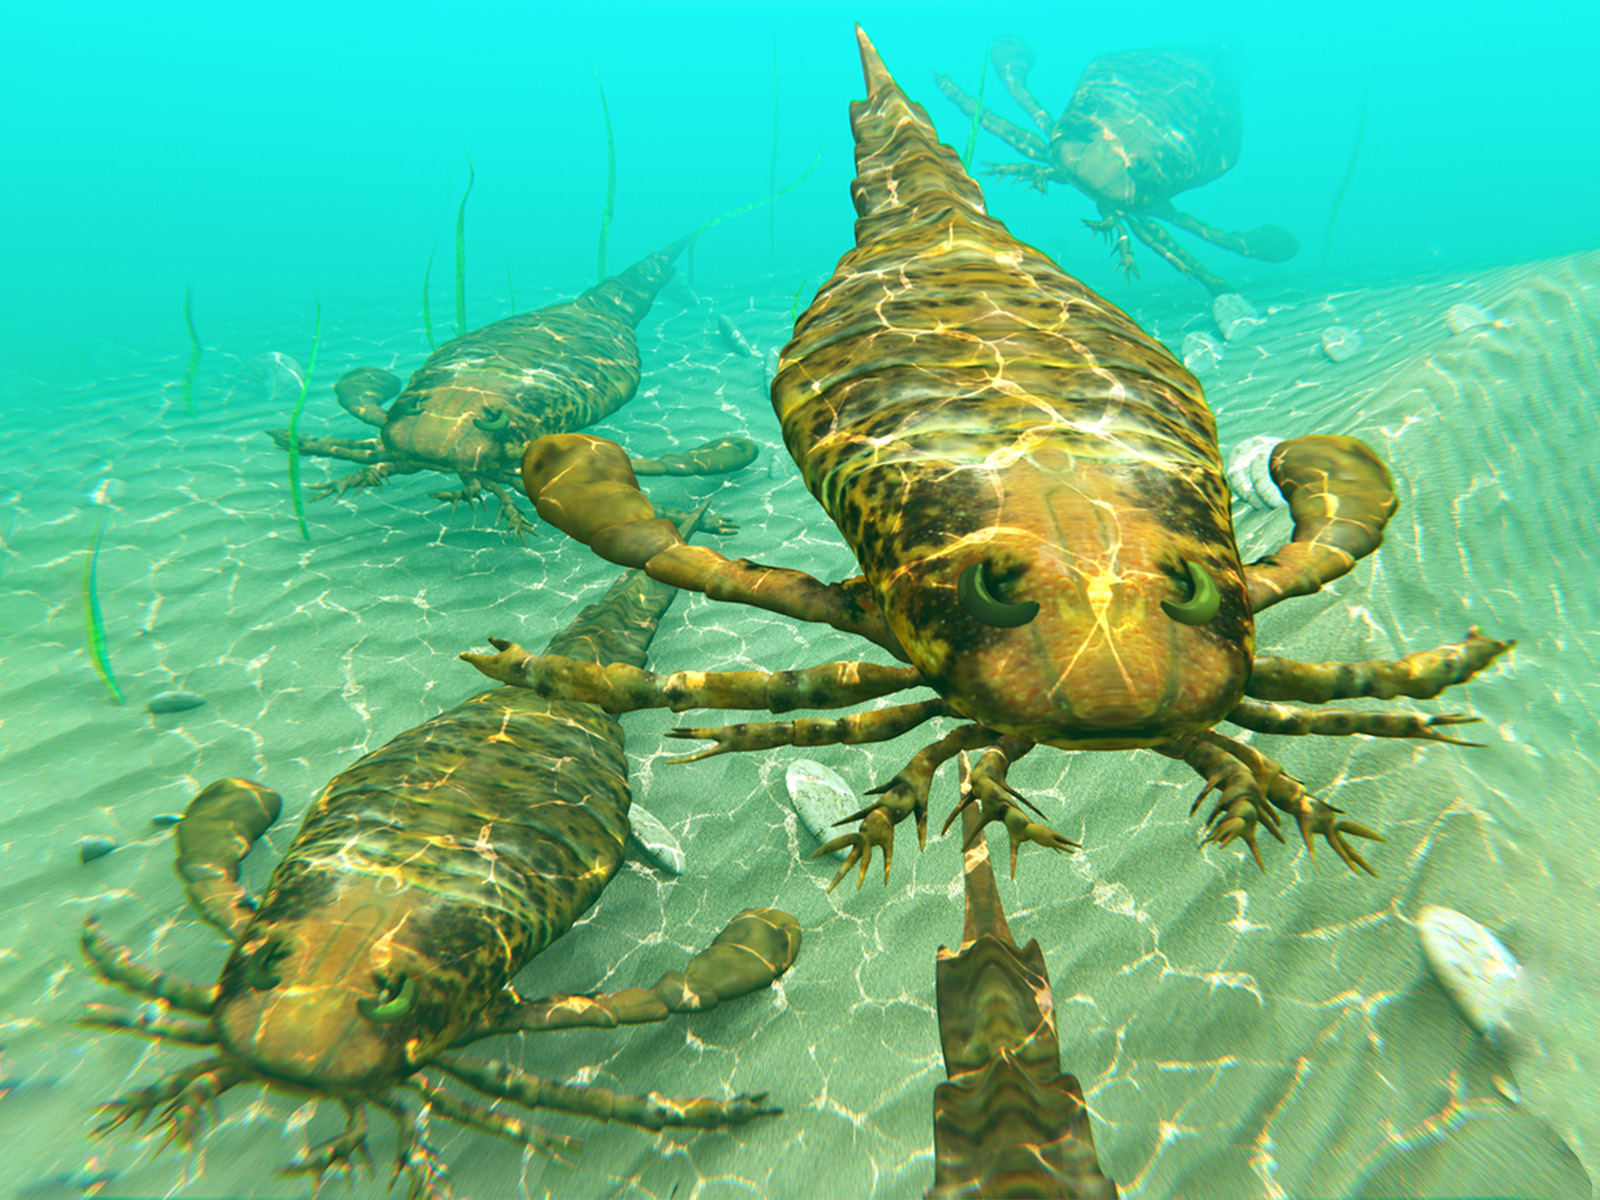 Ancient sea scorpions